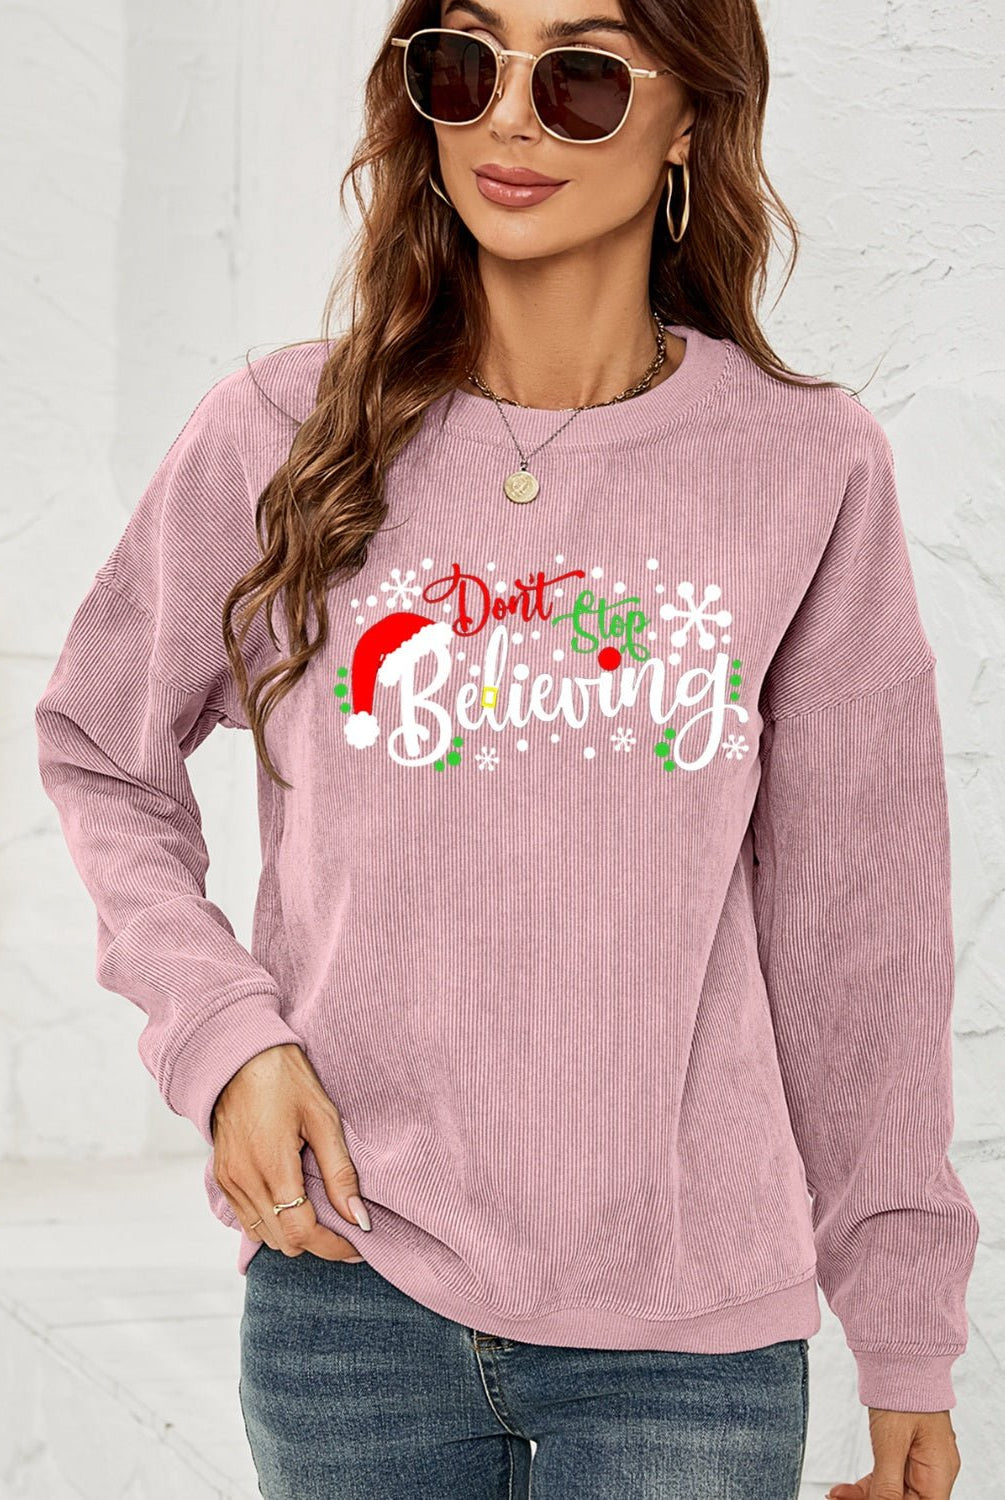 DON'T STOP BELIEVING Graphic Sweatshirt - GemThreads Boutique